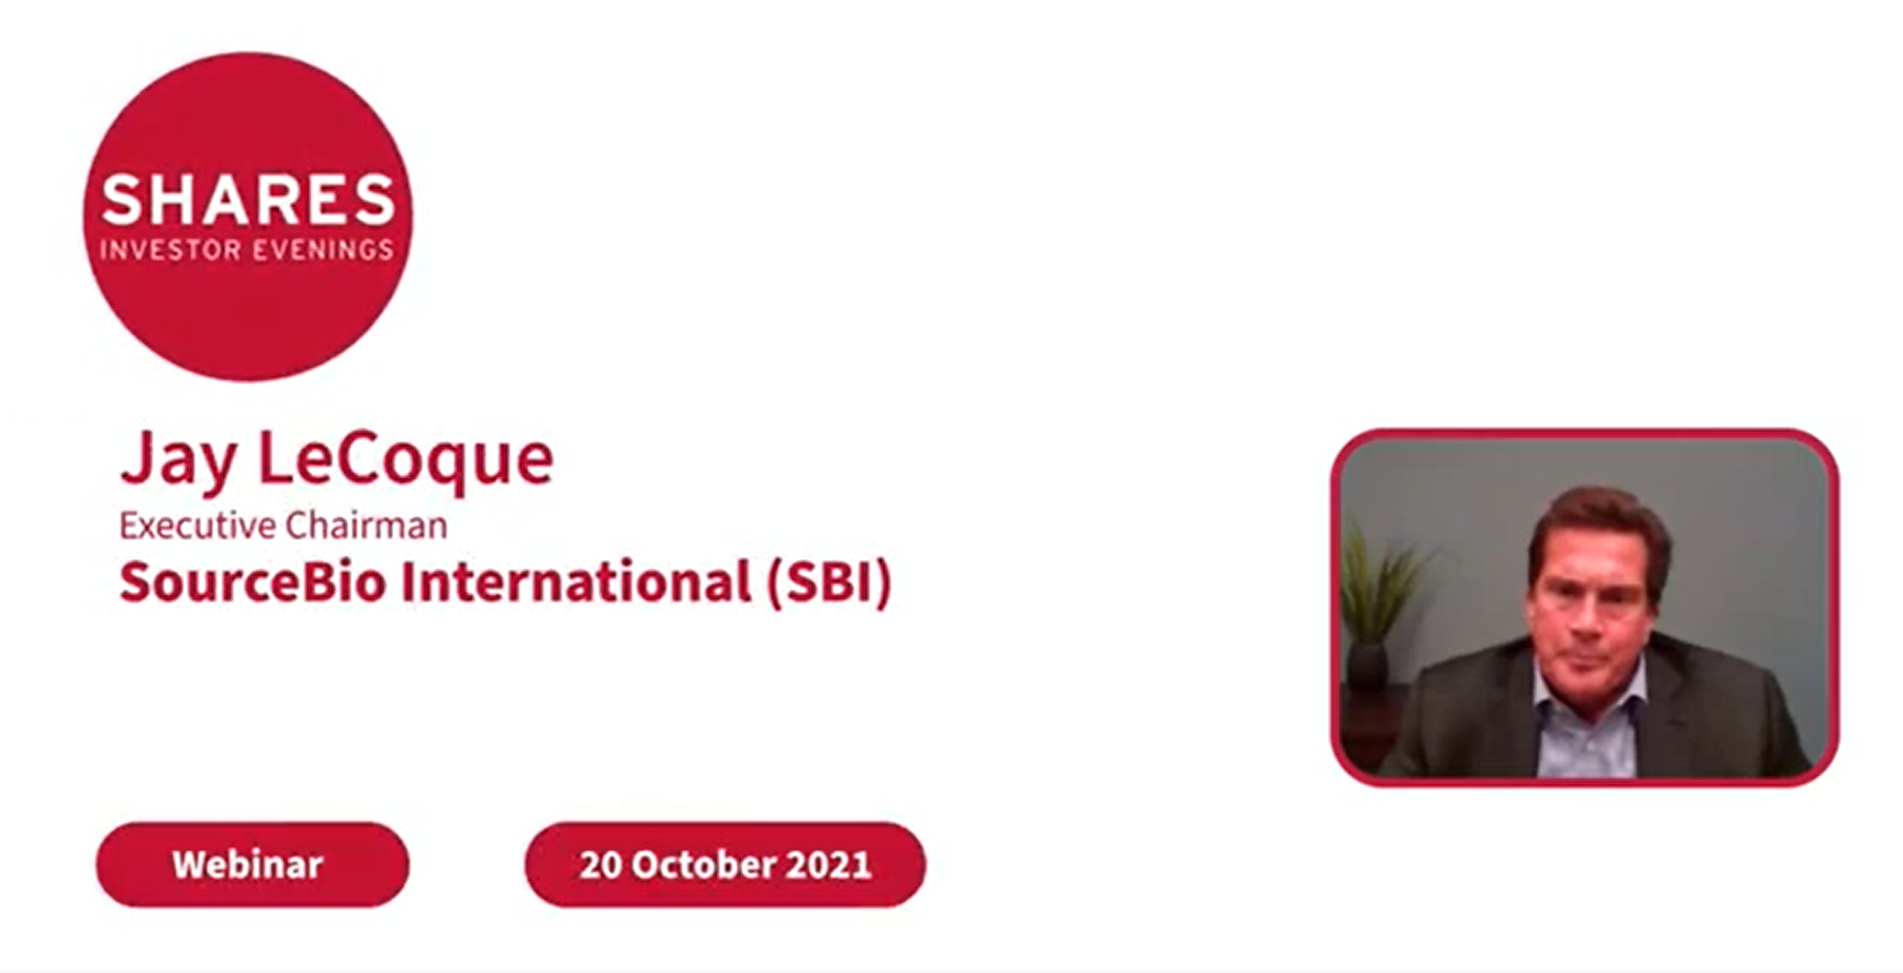 SourceBio International (SBI) - Jay LeCoque, Executive Chairman